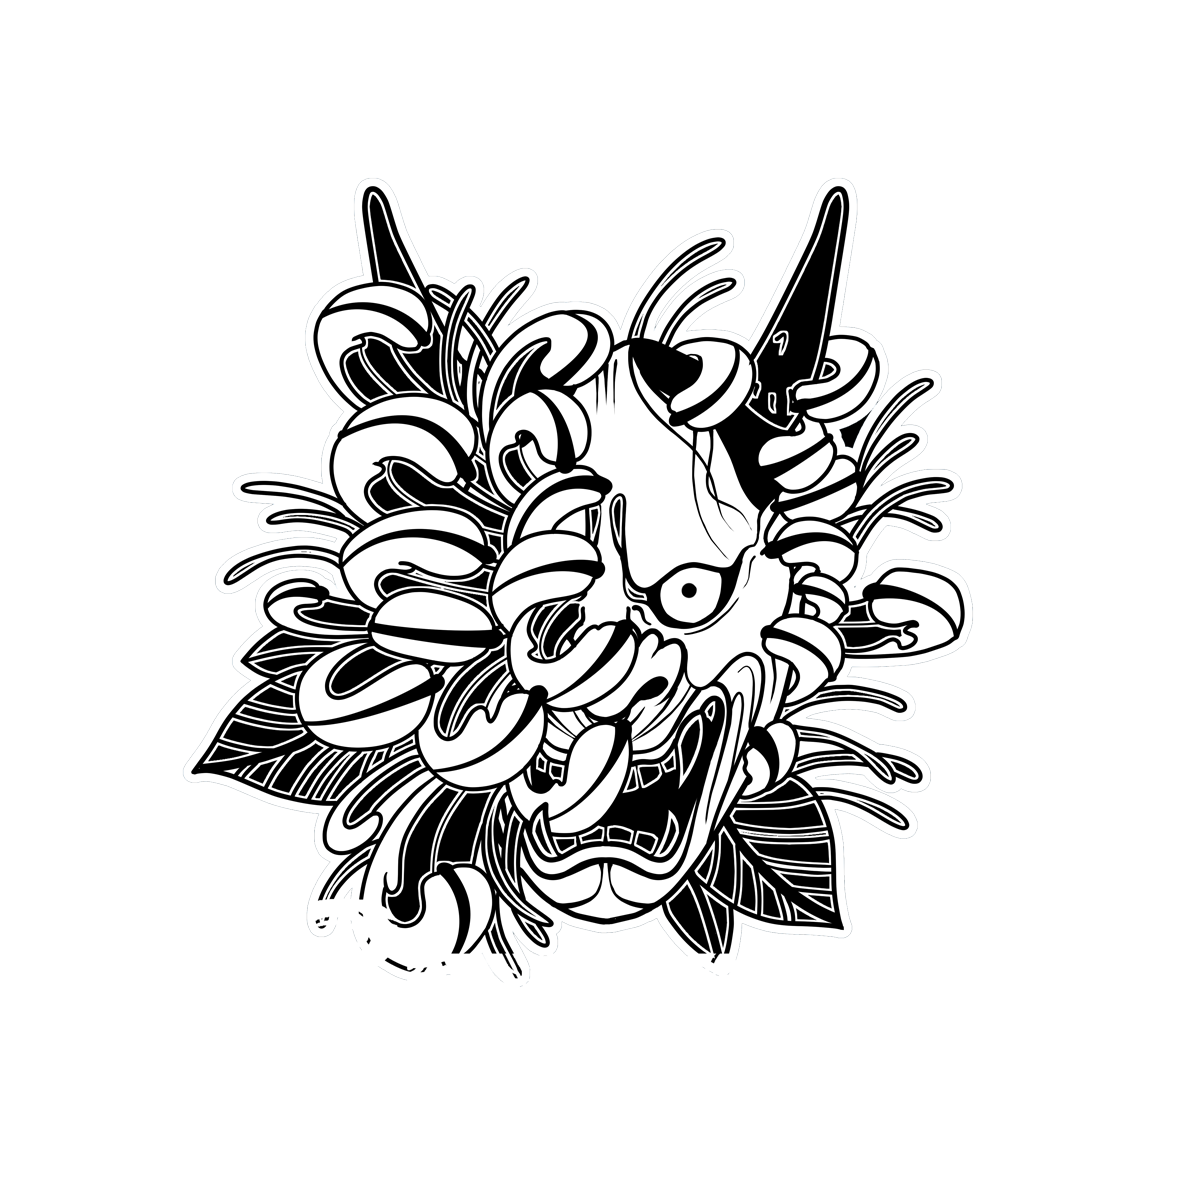 Shisa Dog Tattoo Design by CrisLuspoTattoos on DeviantArt